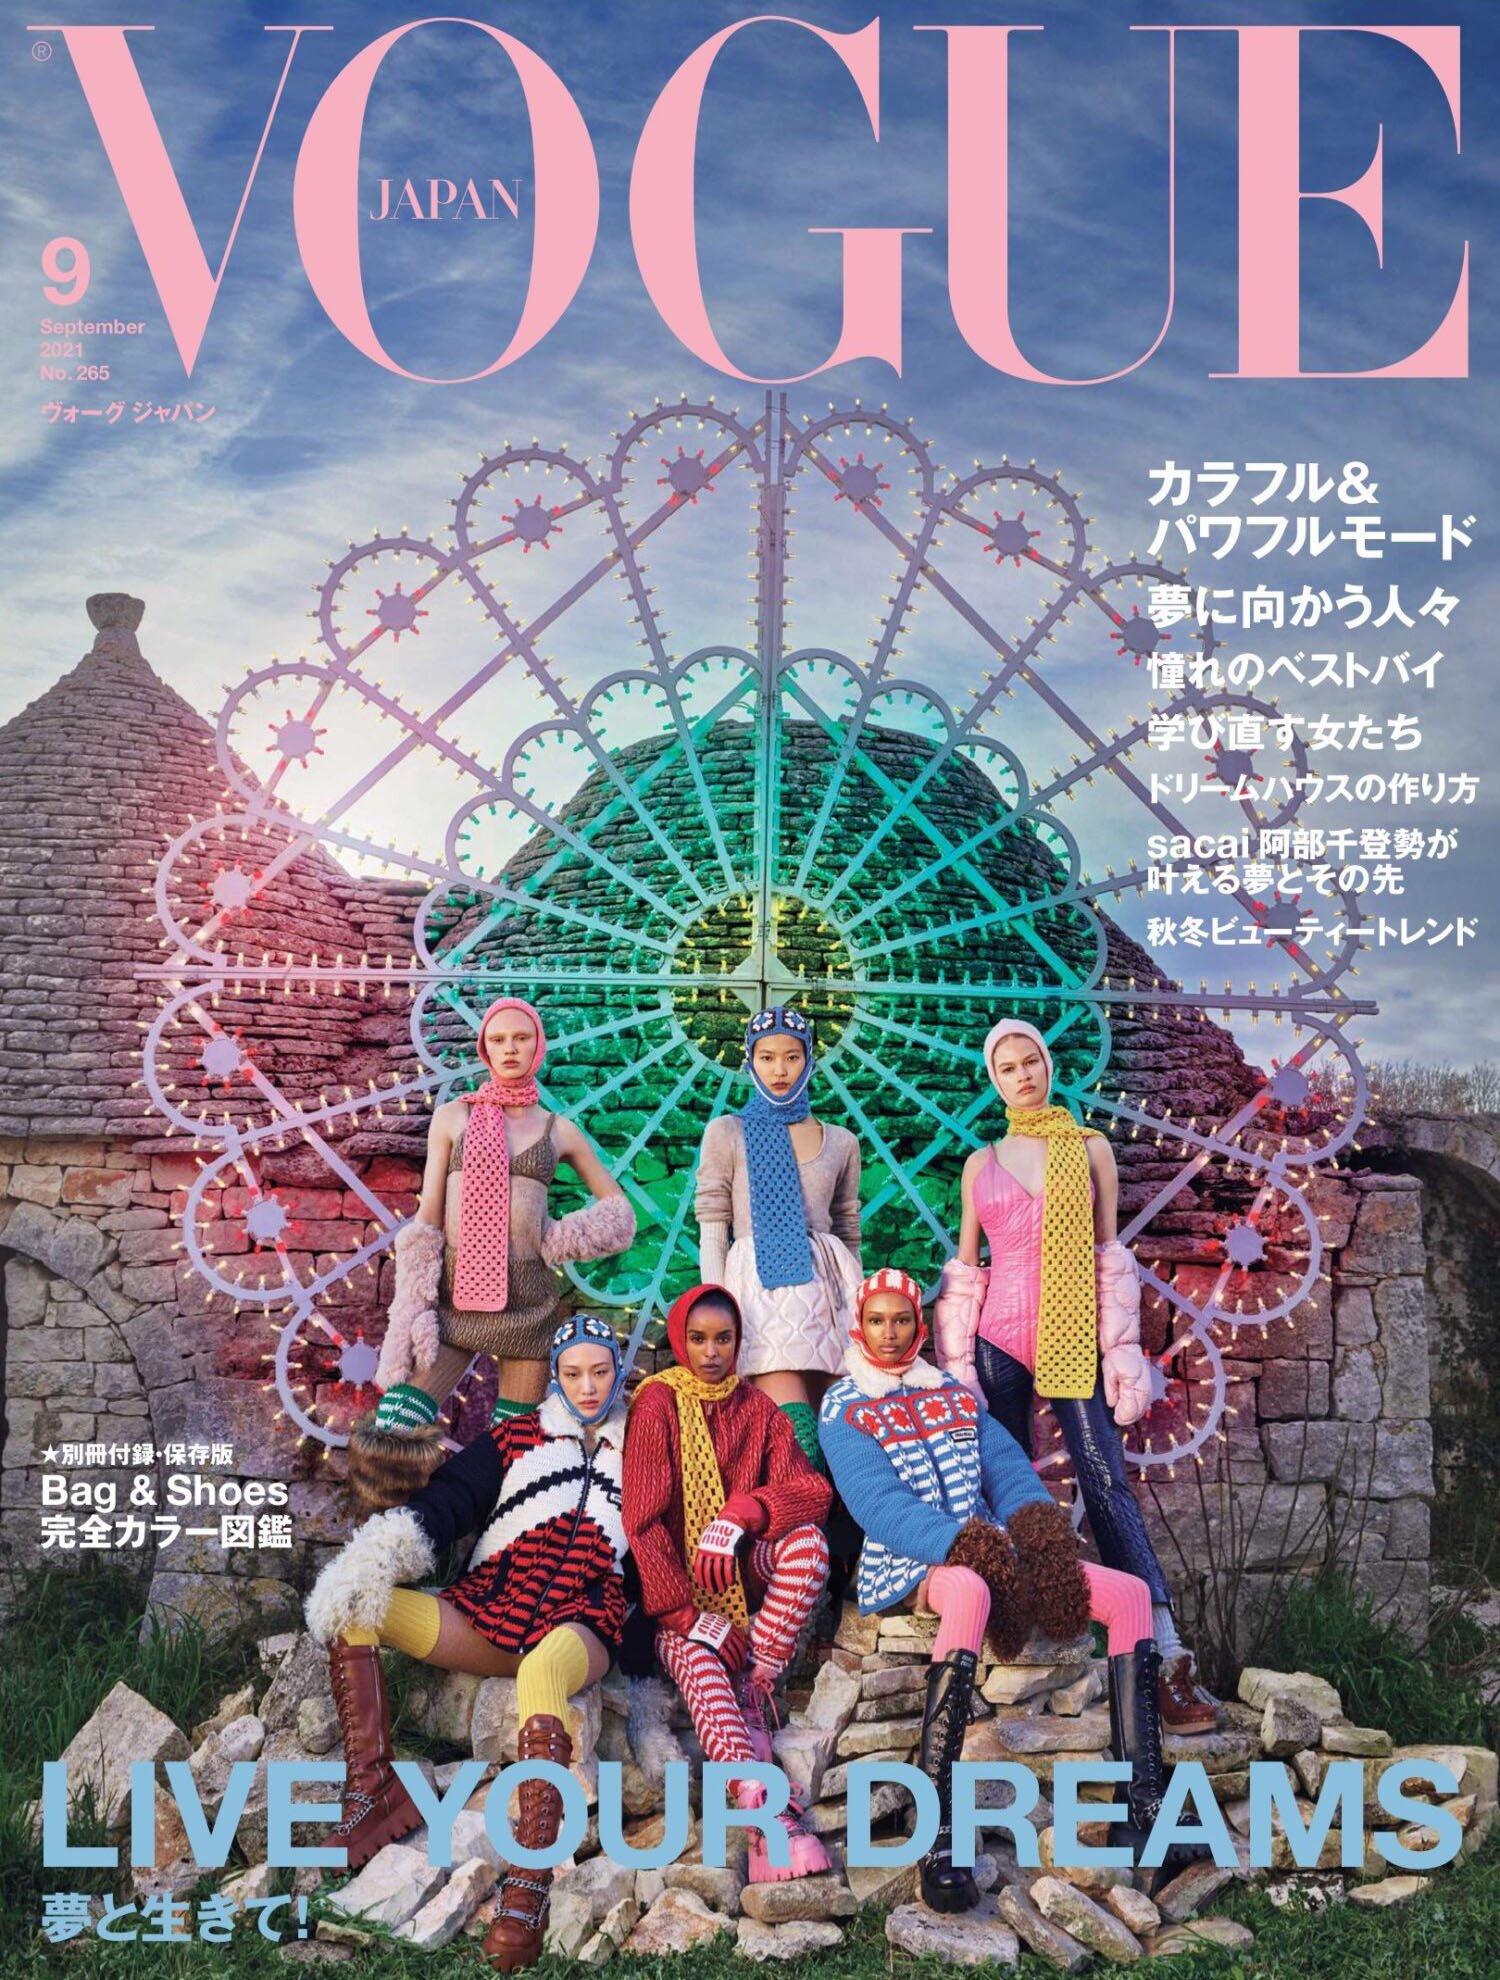 Vogue-Japan-September-2021-cover-by-Luigi-Iango-1.jpg